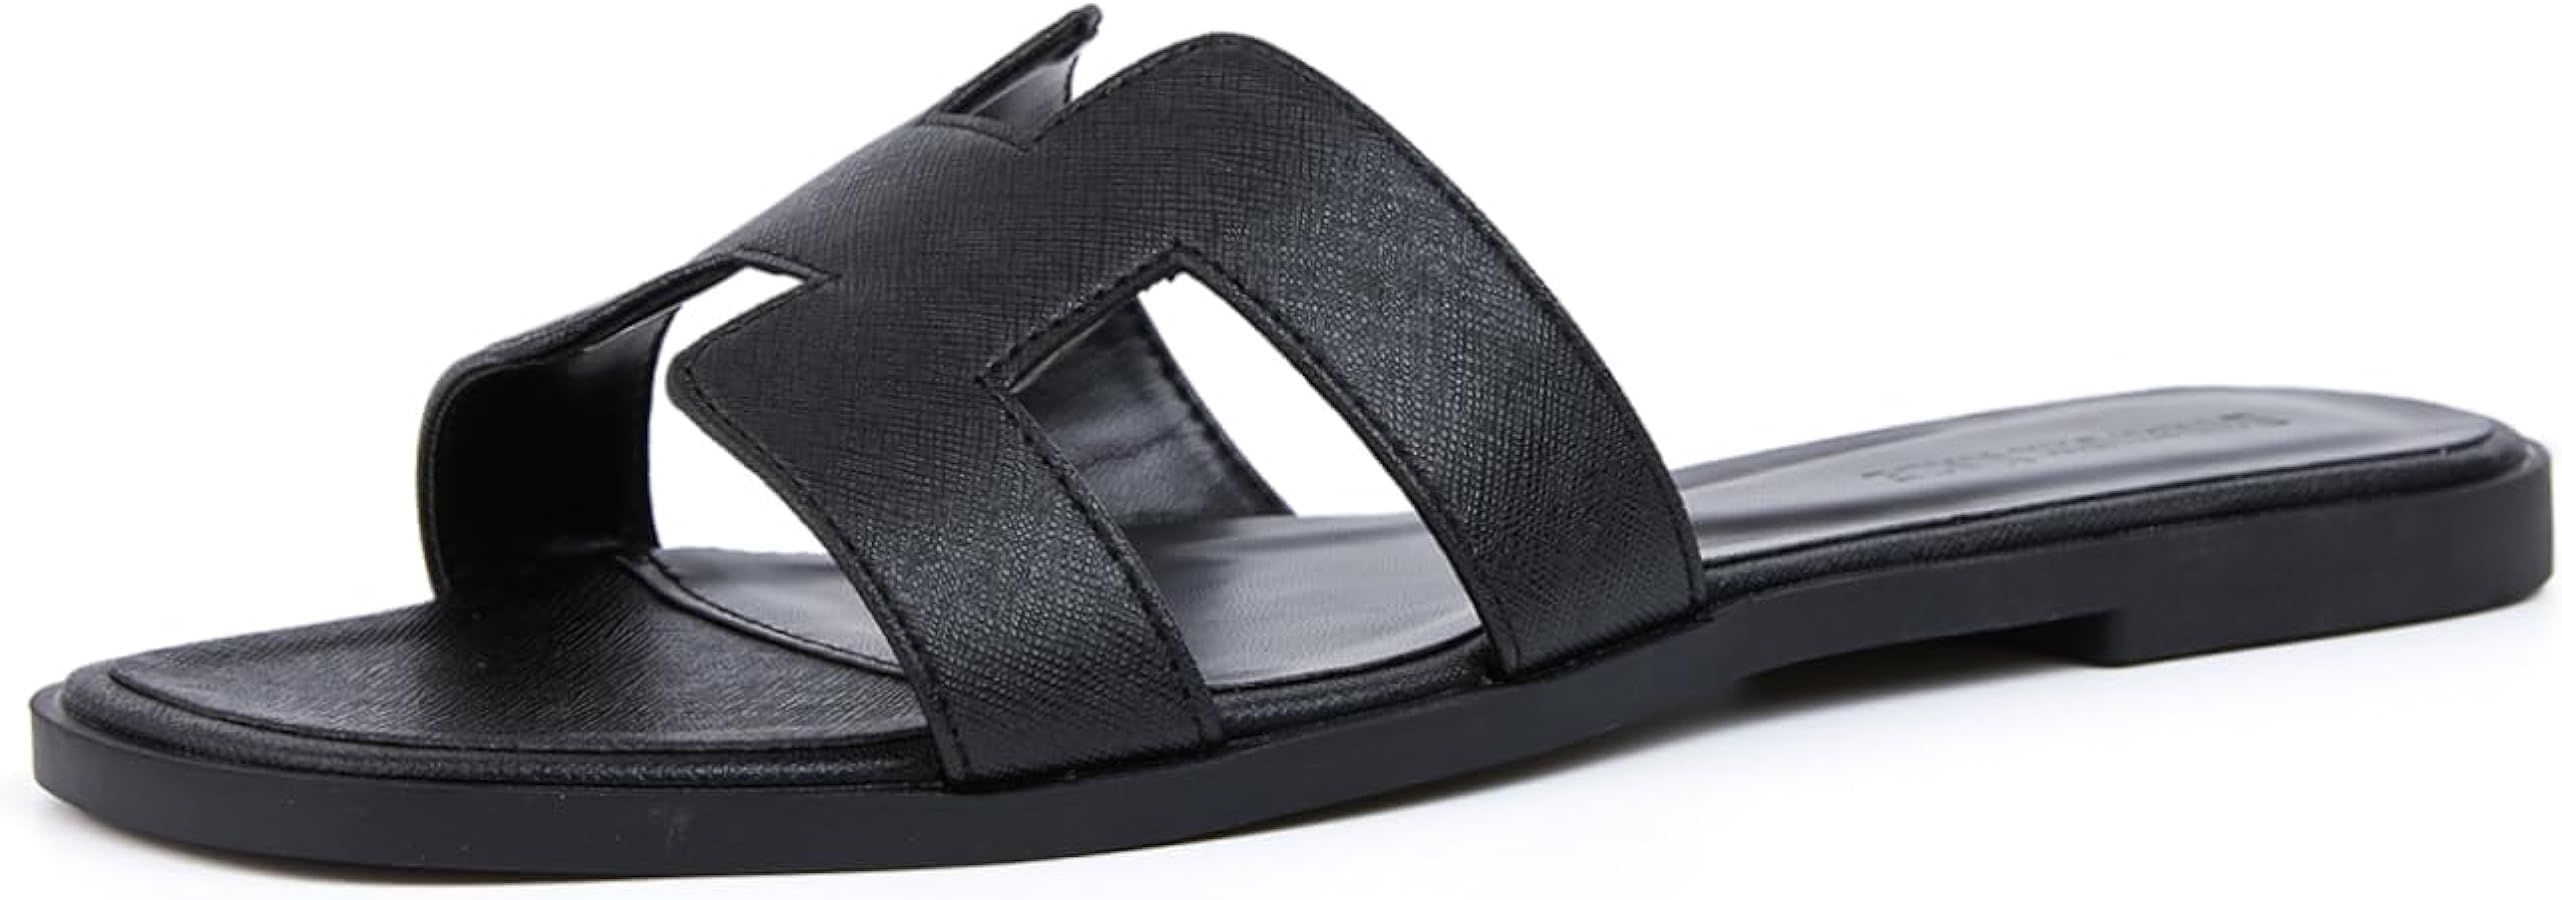 Stratuxx Kaze Women's Flat Slides Sandals Crystal Open Toe Rhinestone Flat Sandals Silver Metalli... | Amazon (US)